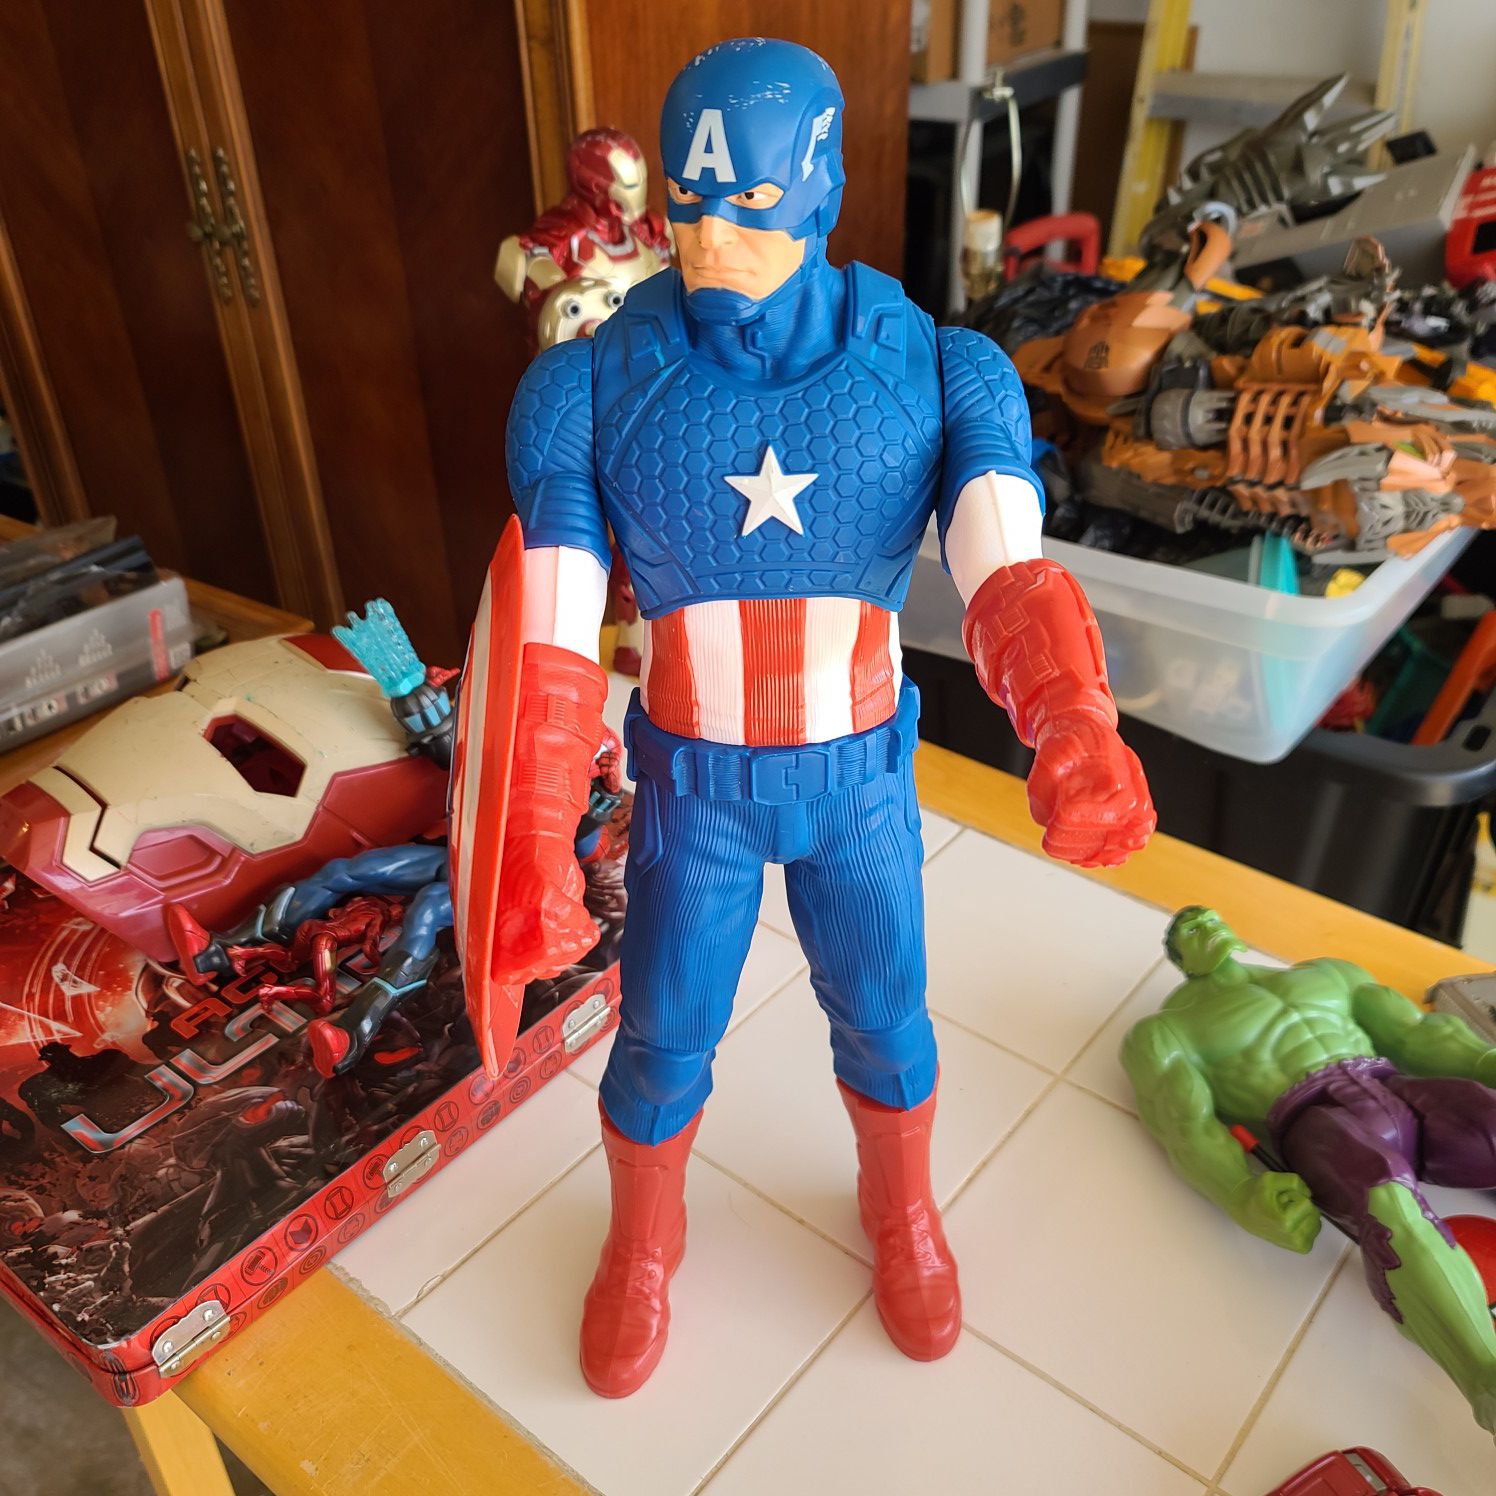 Avengers action figure set